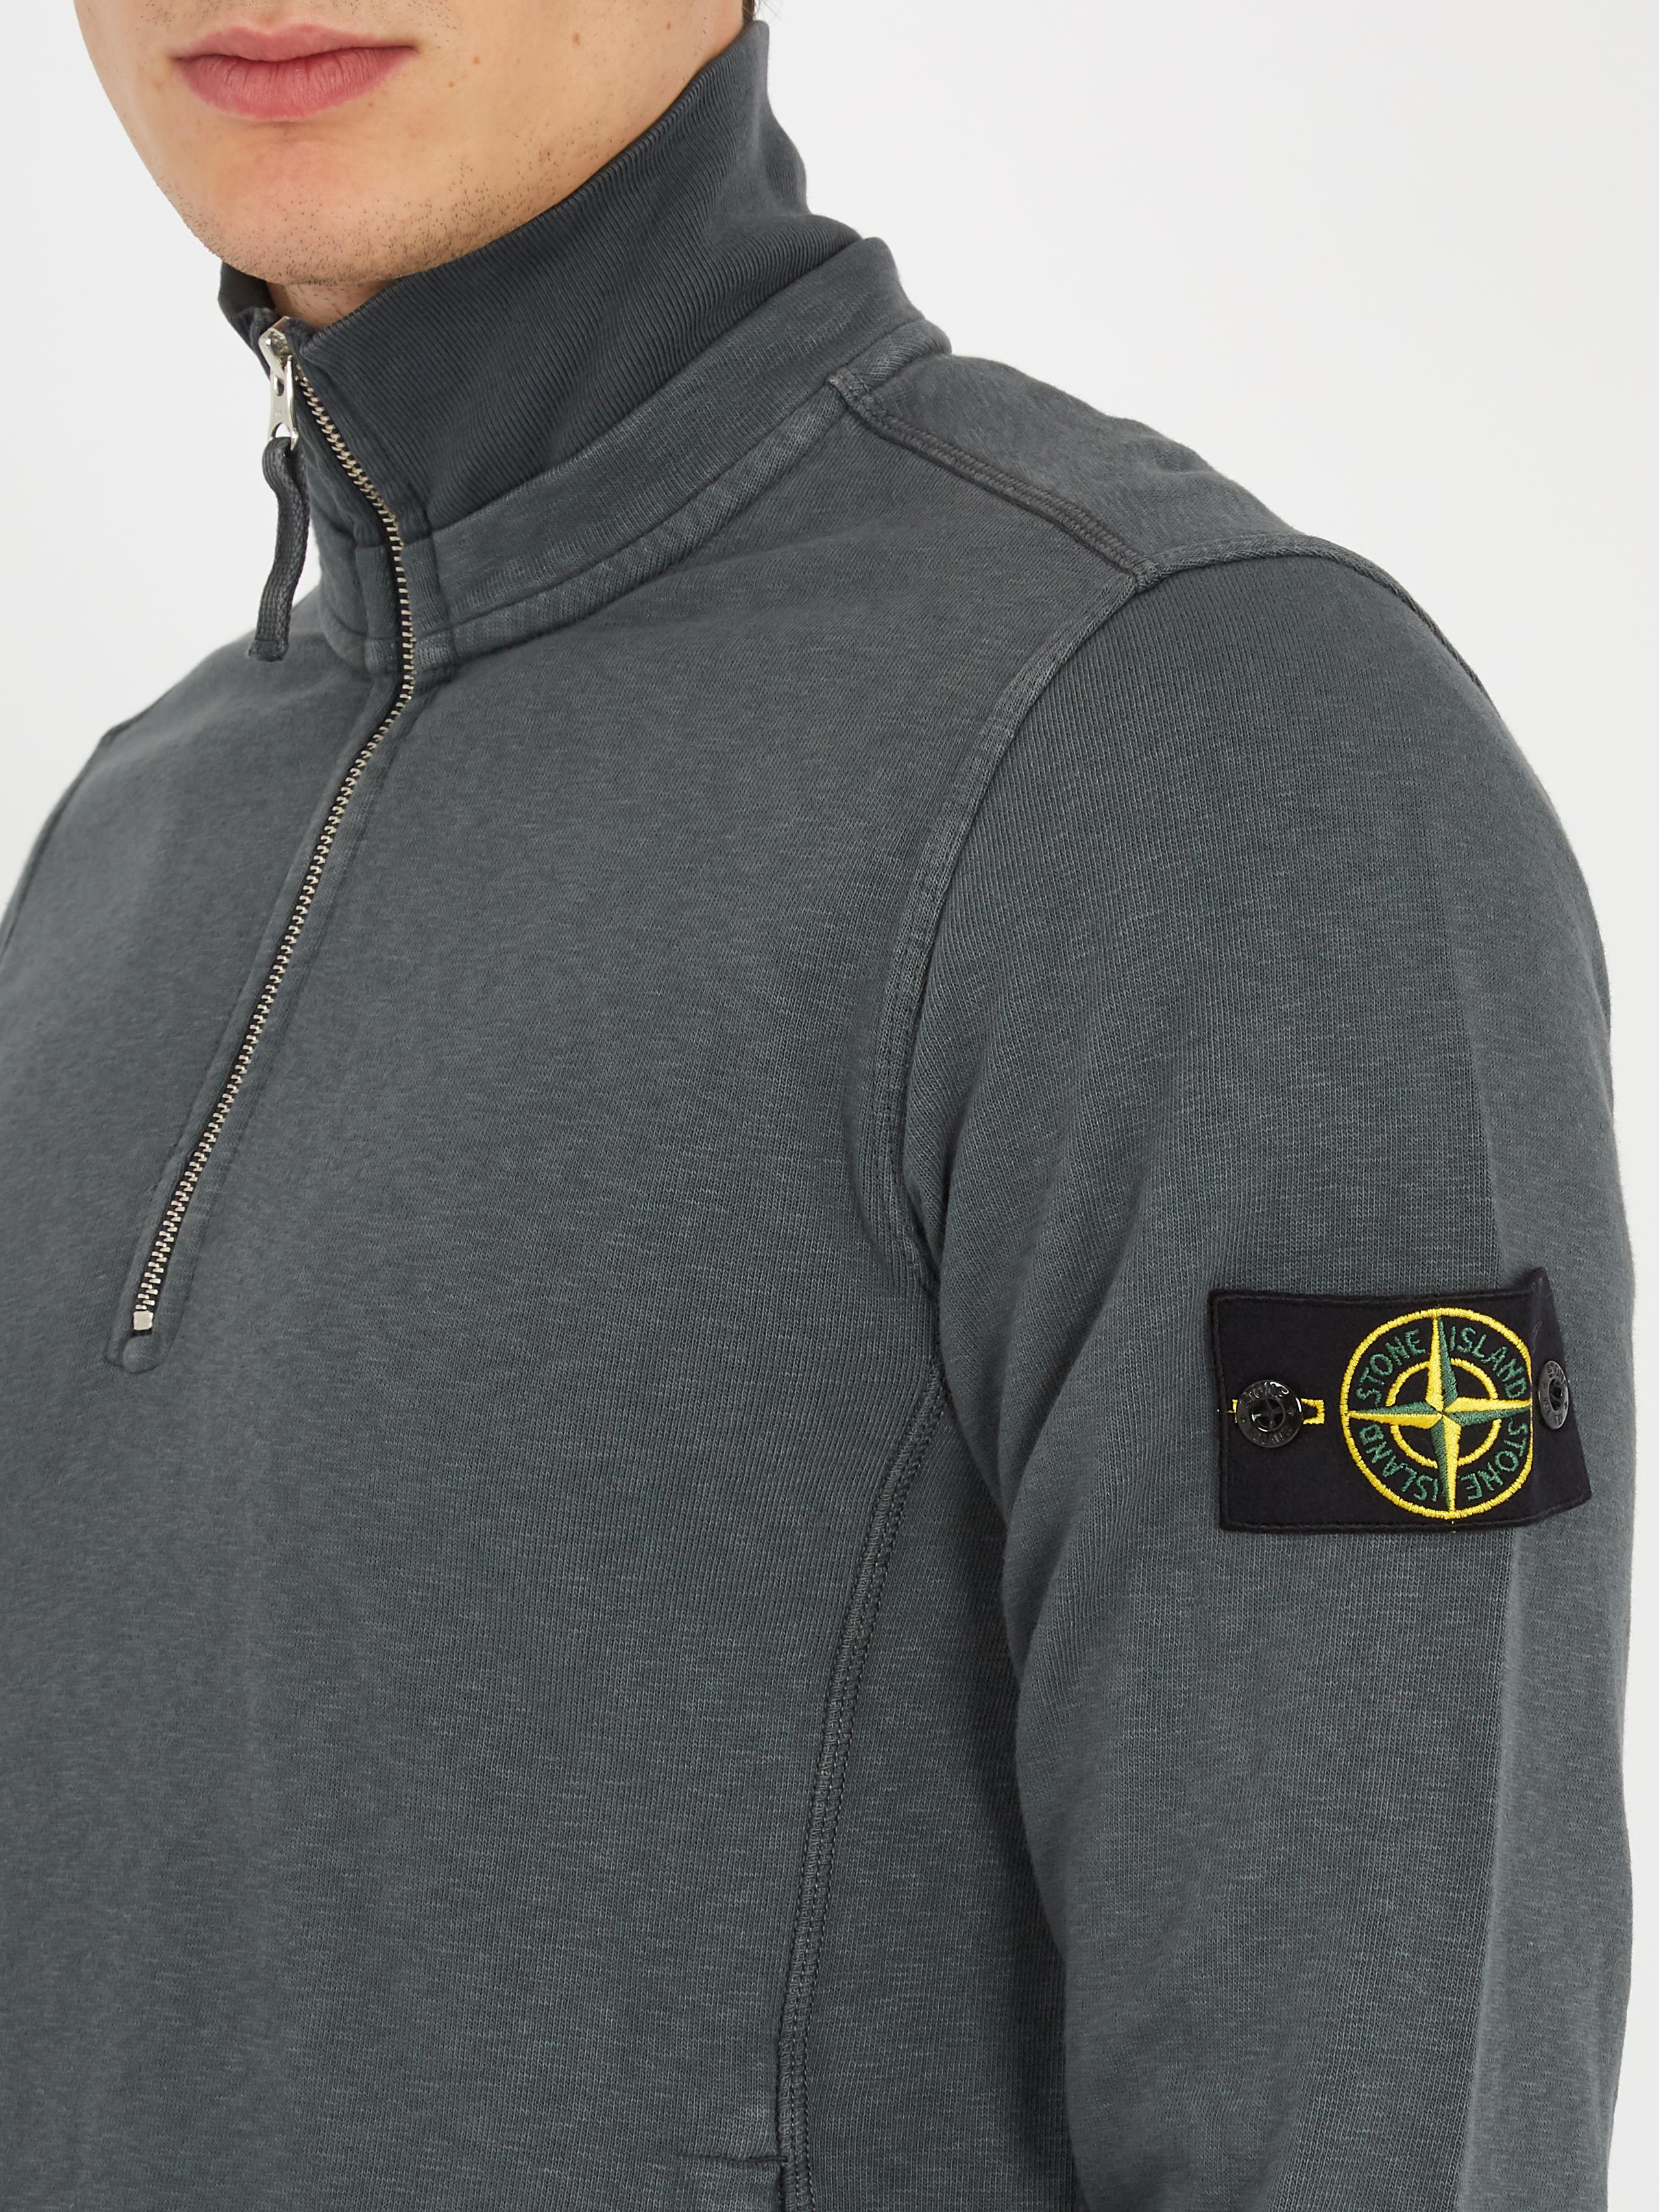 Stone Island Half-zip Cotton Sweater in Grey (Gray) for Men - Lyst